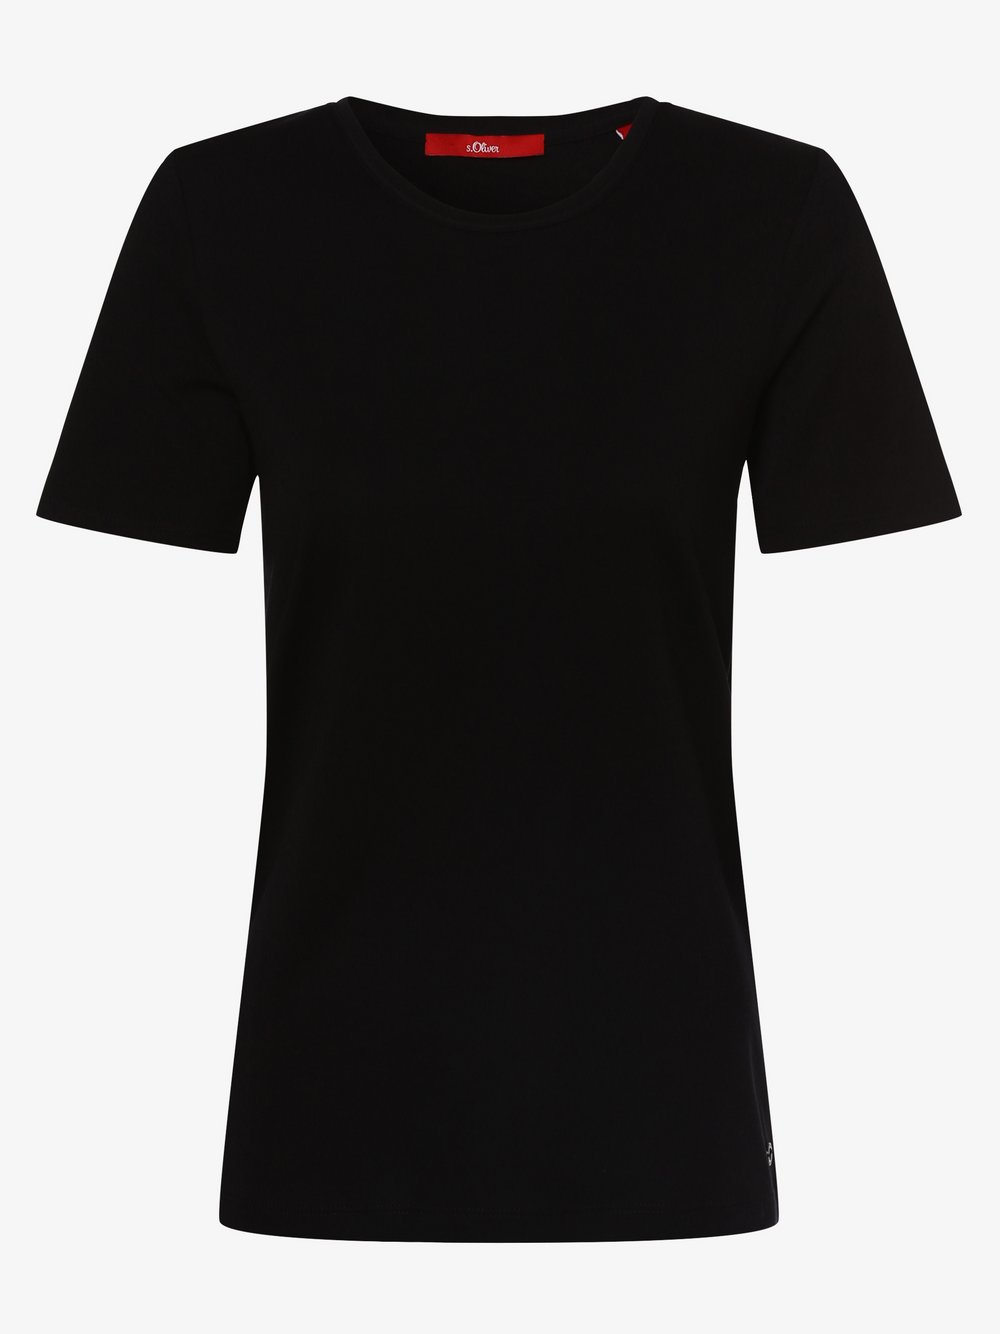 s.Oliver - T-shirt damski, czarny